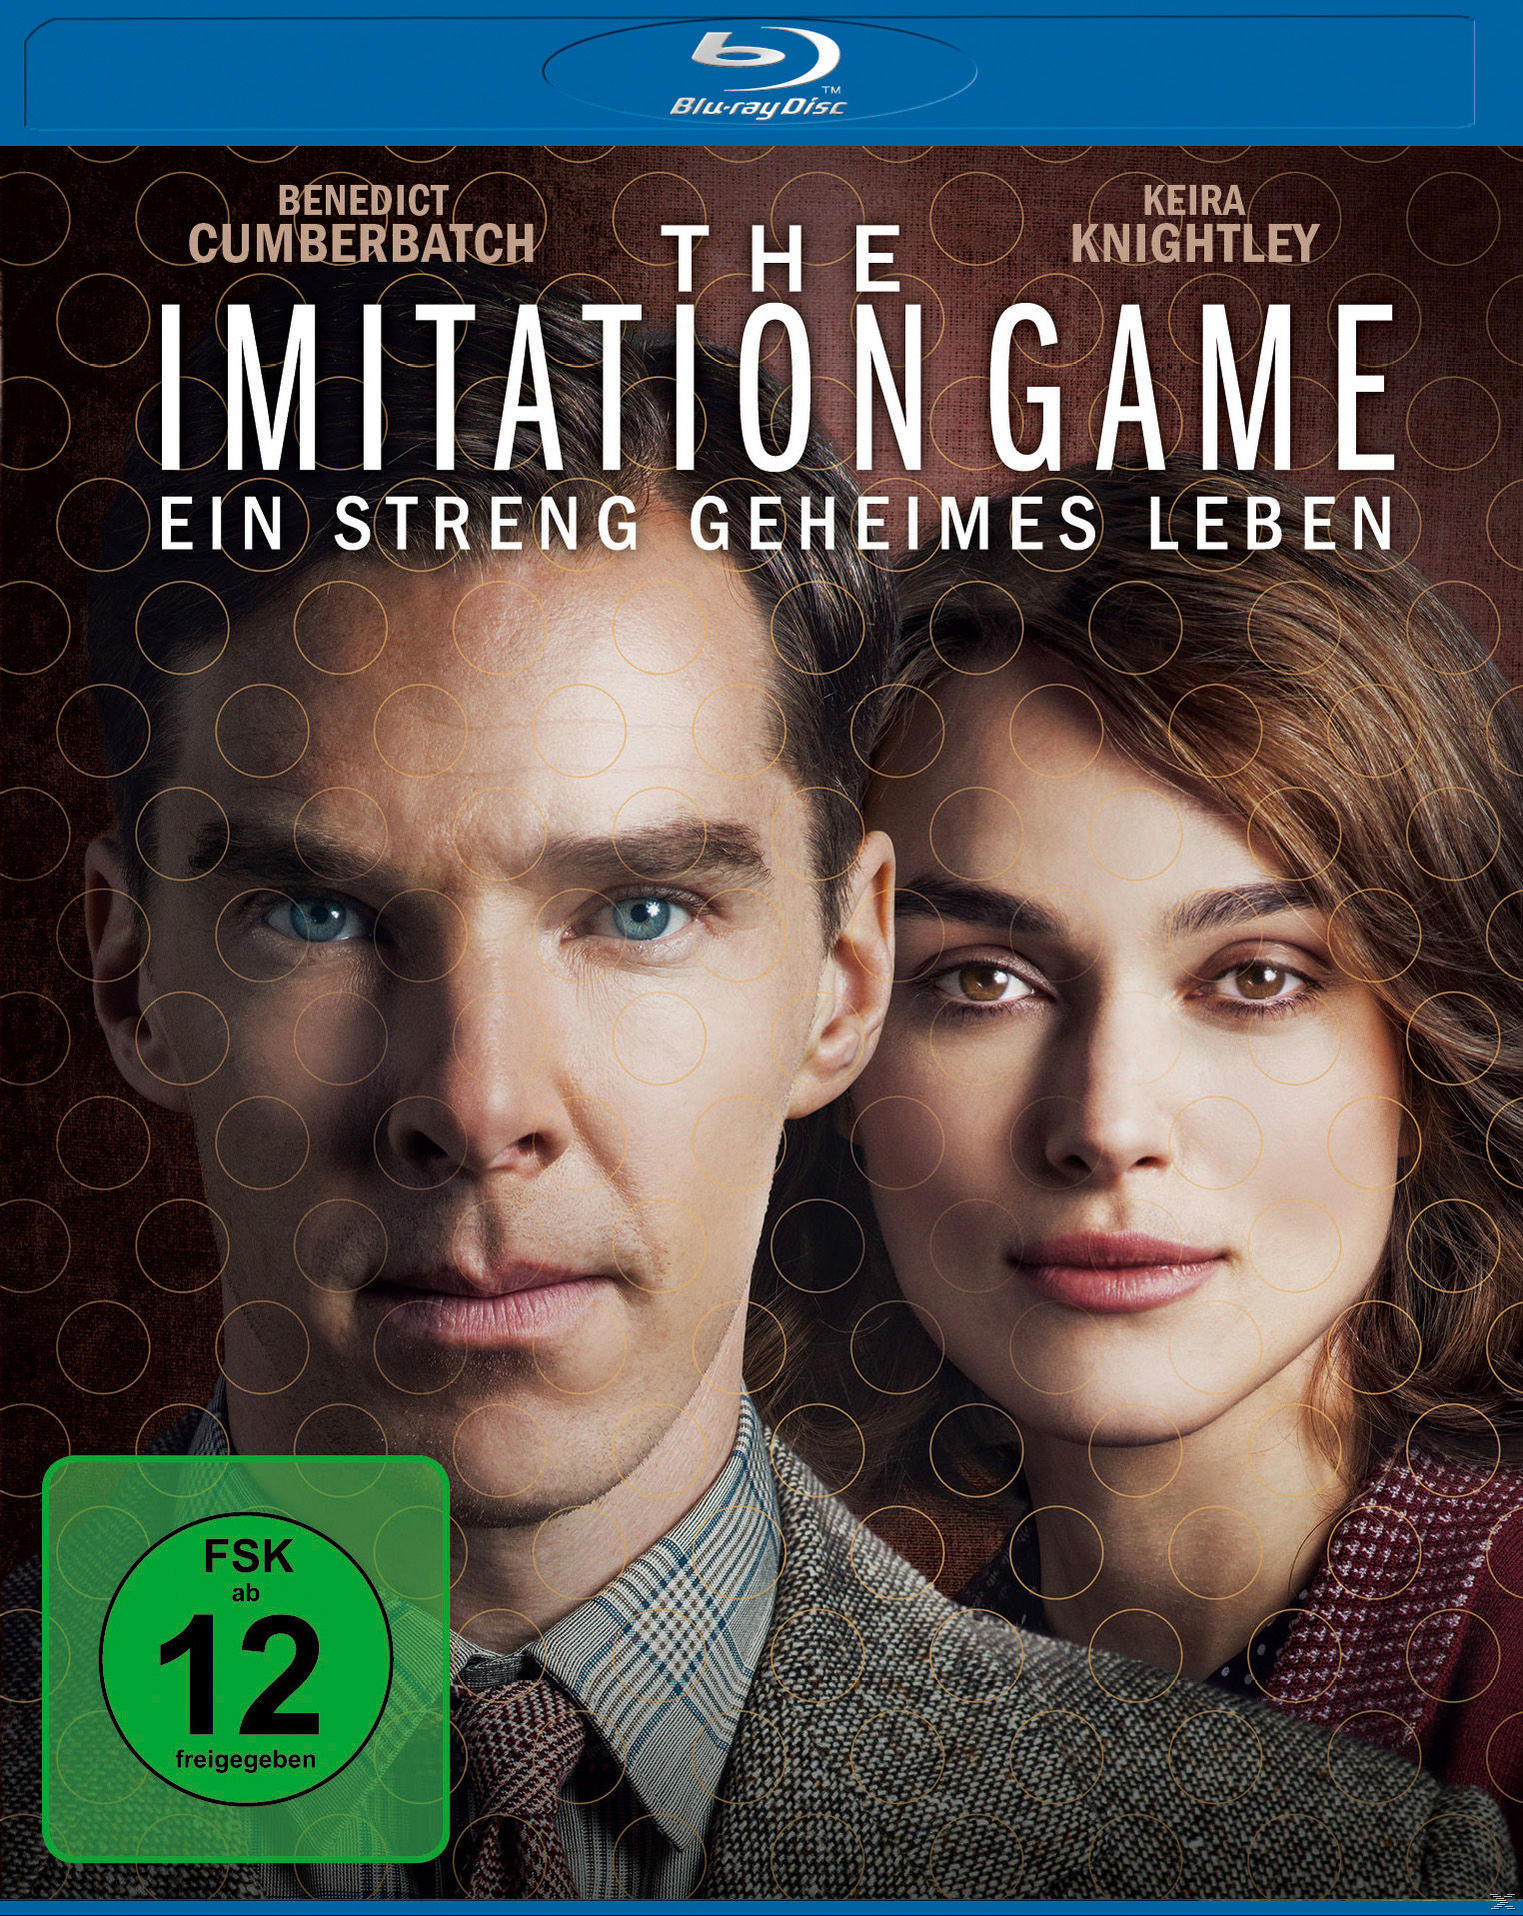 Blu-ray streng Geheimes Game Leben - Imitation Ein The